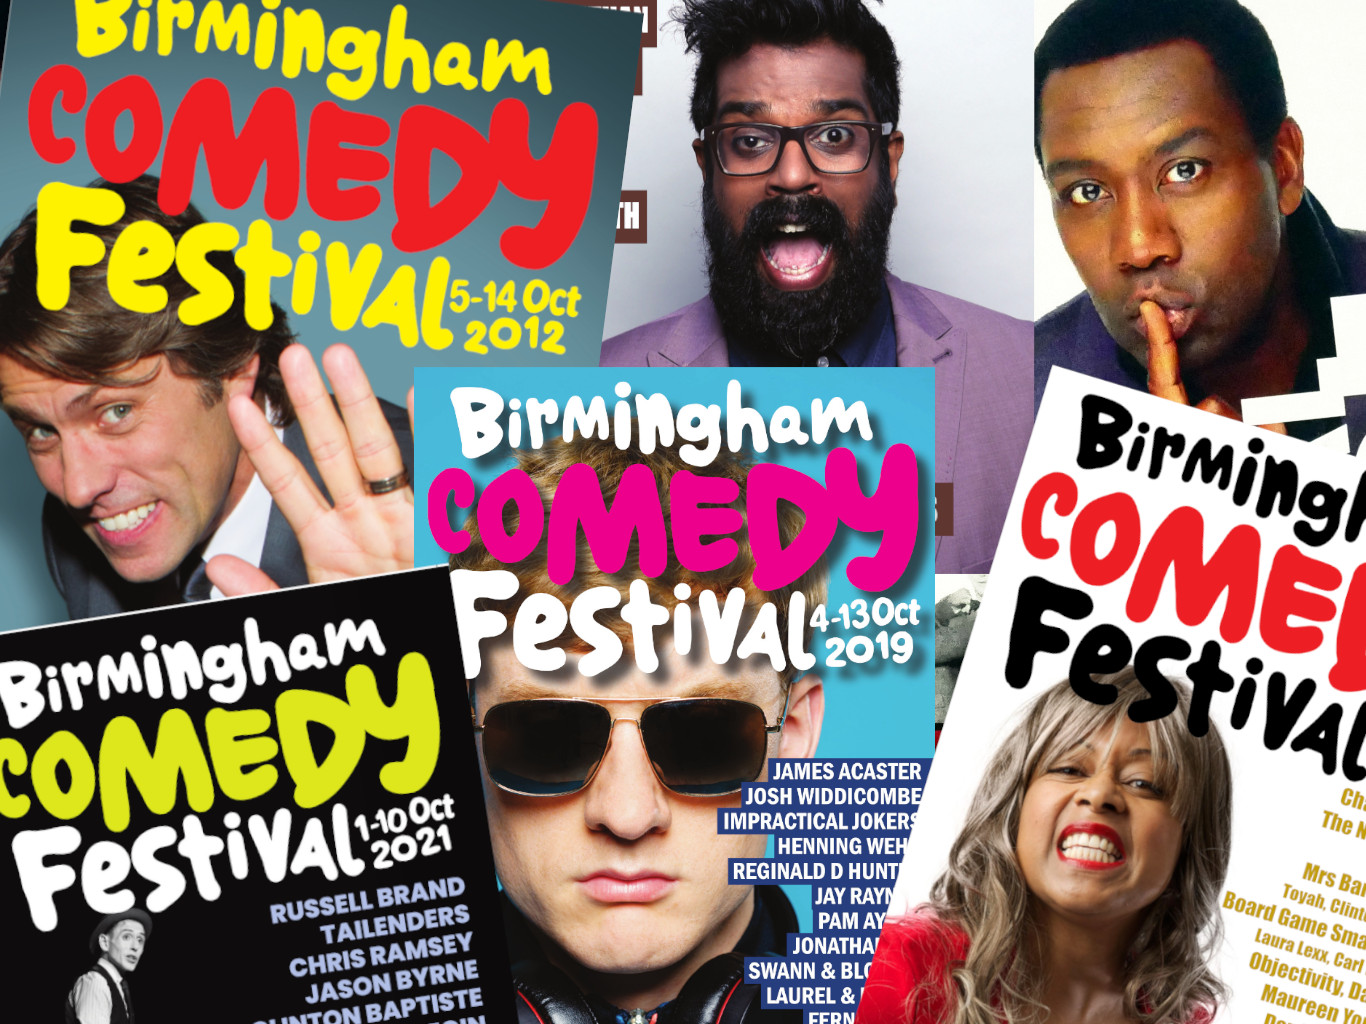 Birmingham Comedy Festival brochure covers